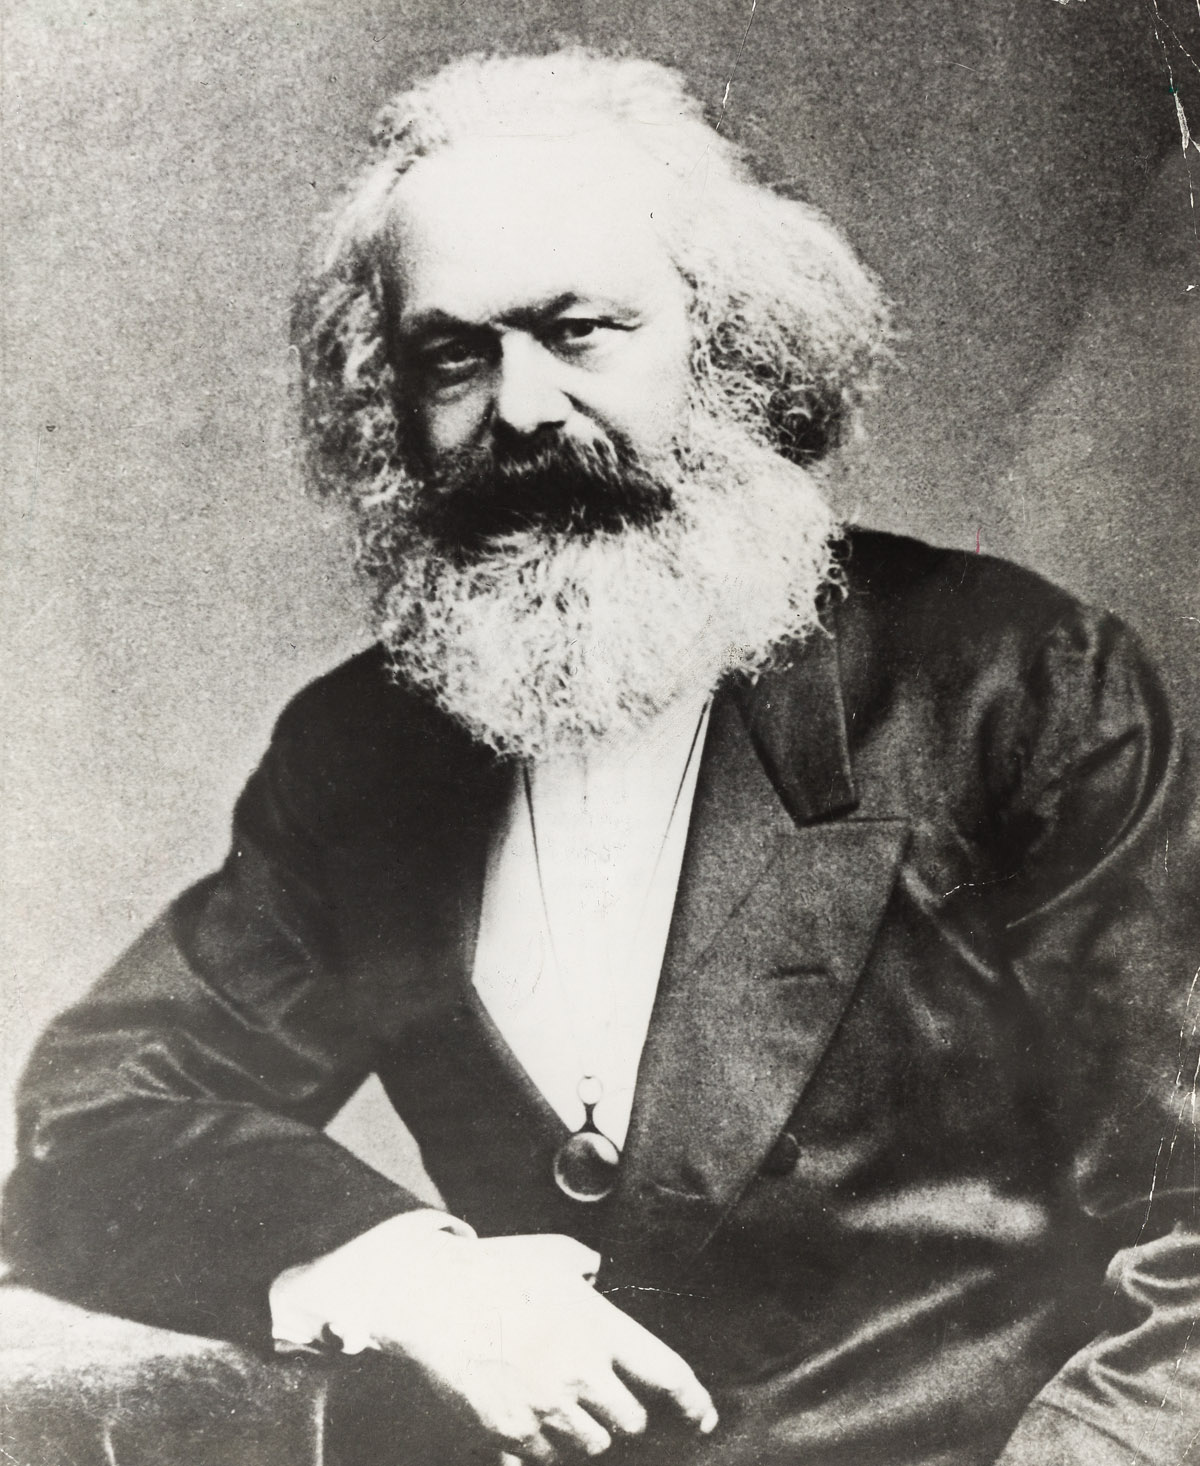 (AUTHOR OF THE COMMUNIST MANIFESTO) Portrait of Karl Marx (1818-1883).